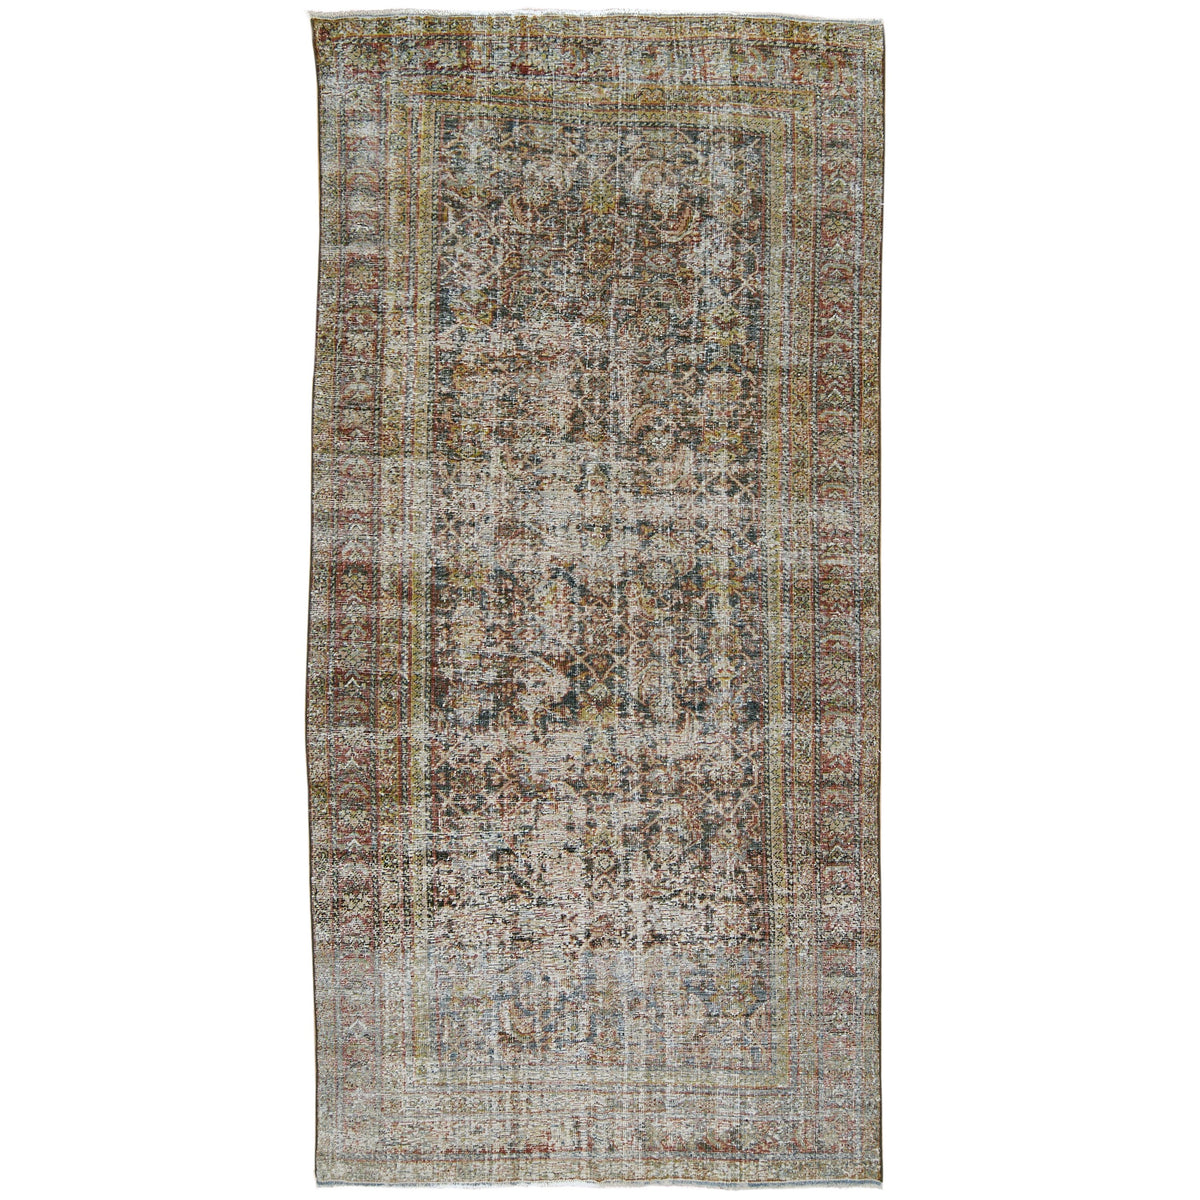 Verta - A Passage Through Persian Elegance | Kuden Rugs